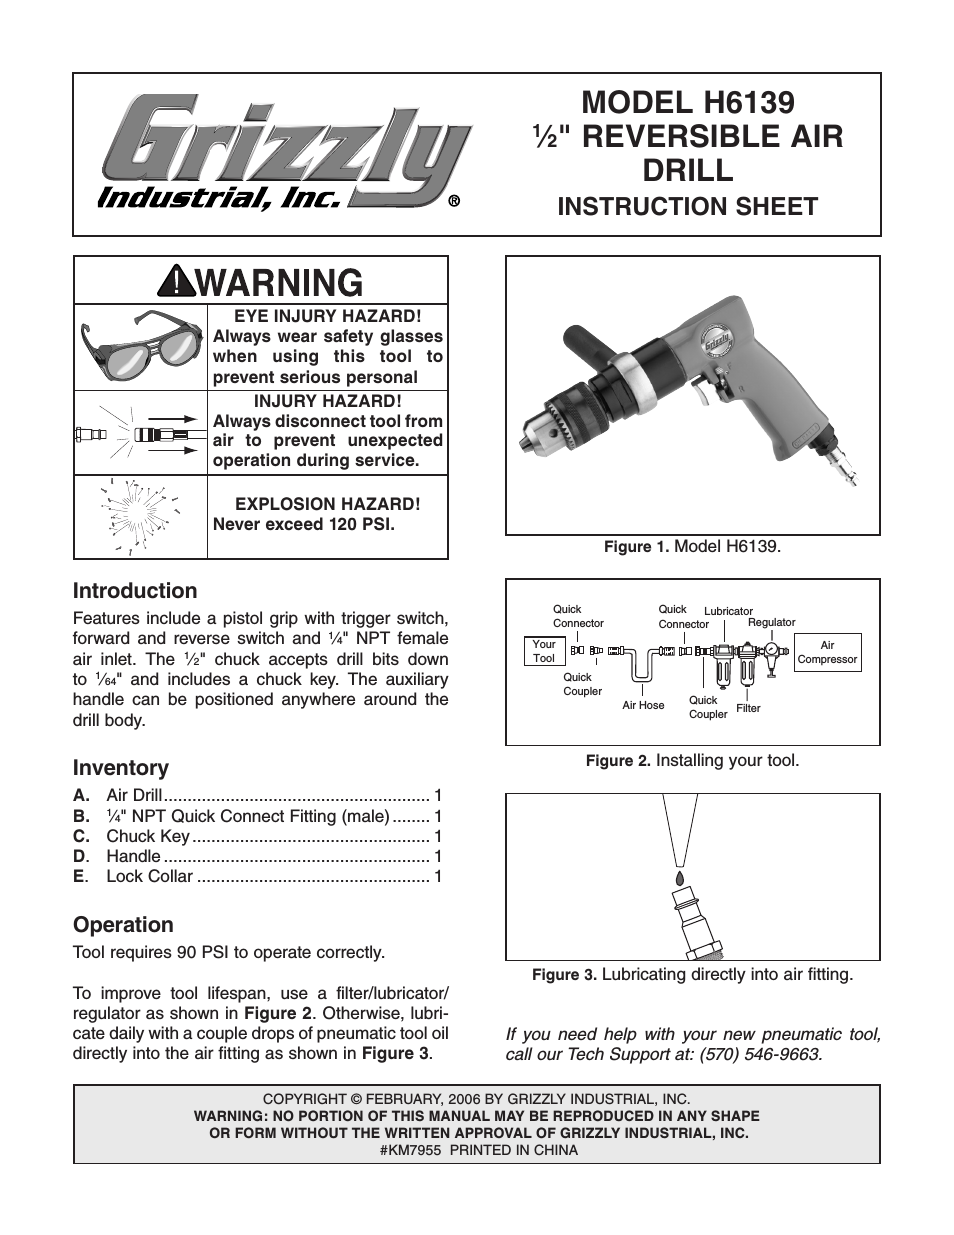 1/2" Reversible Air Drill H6139